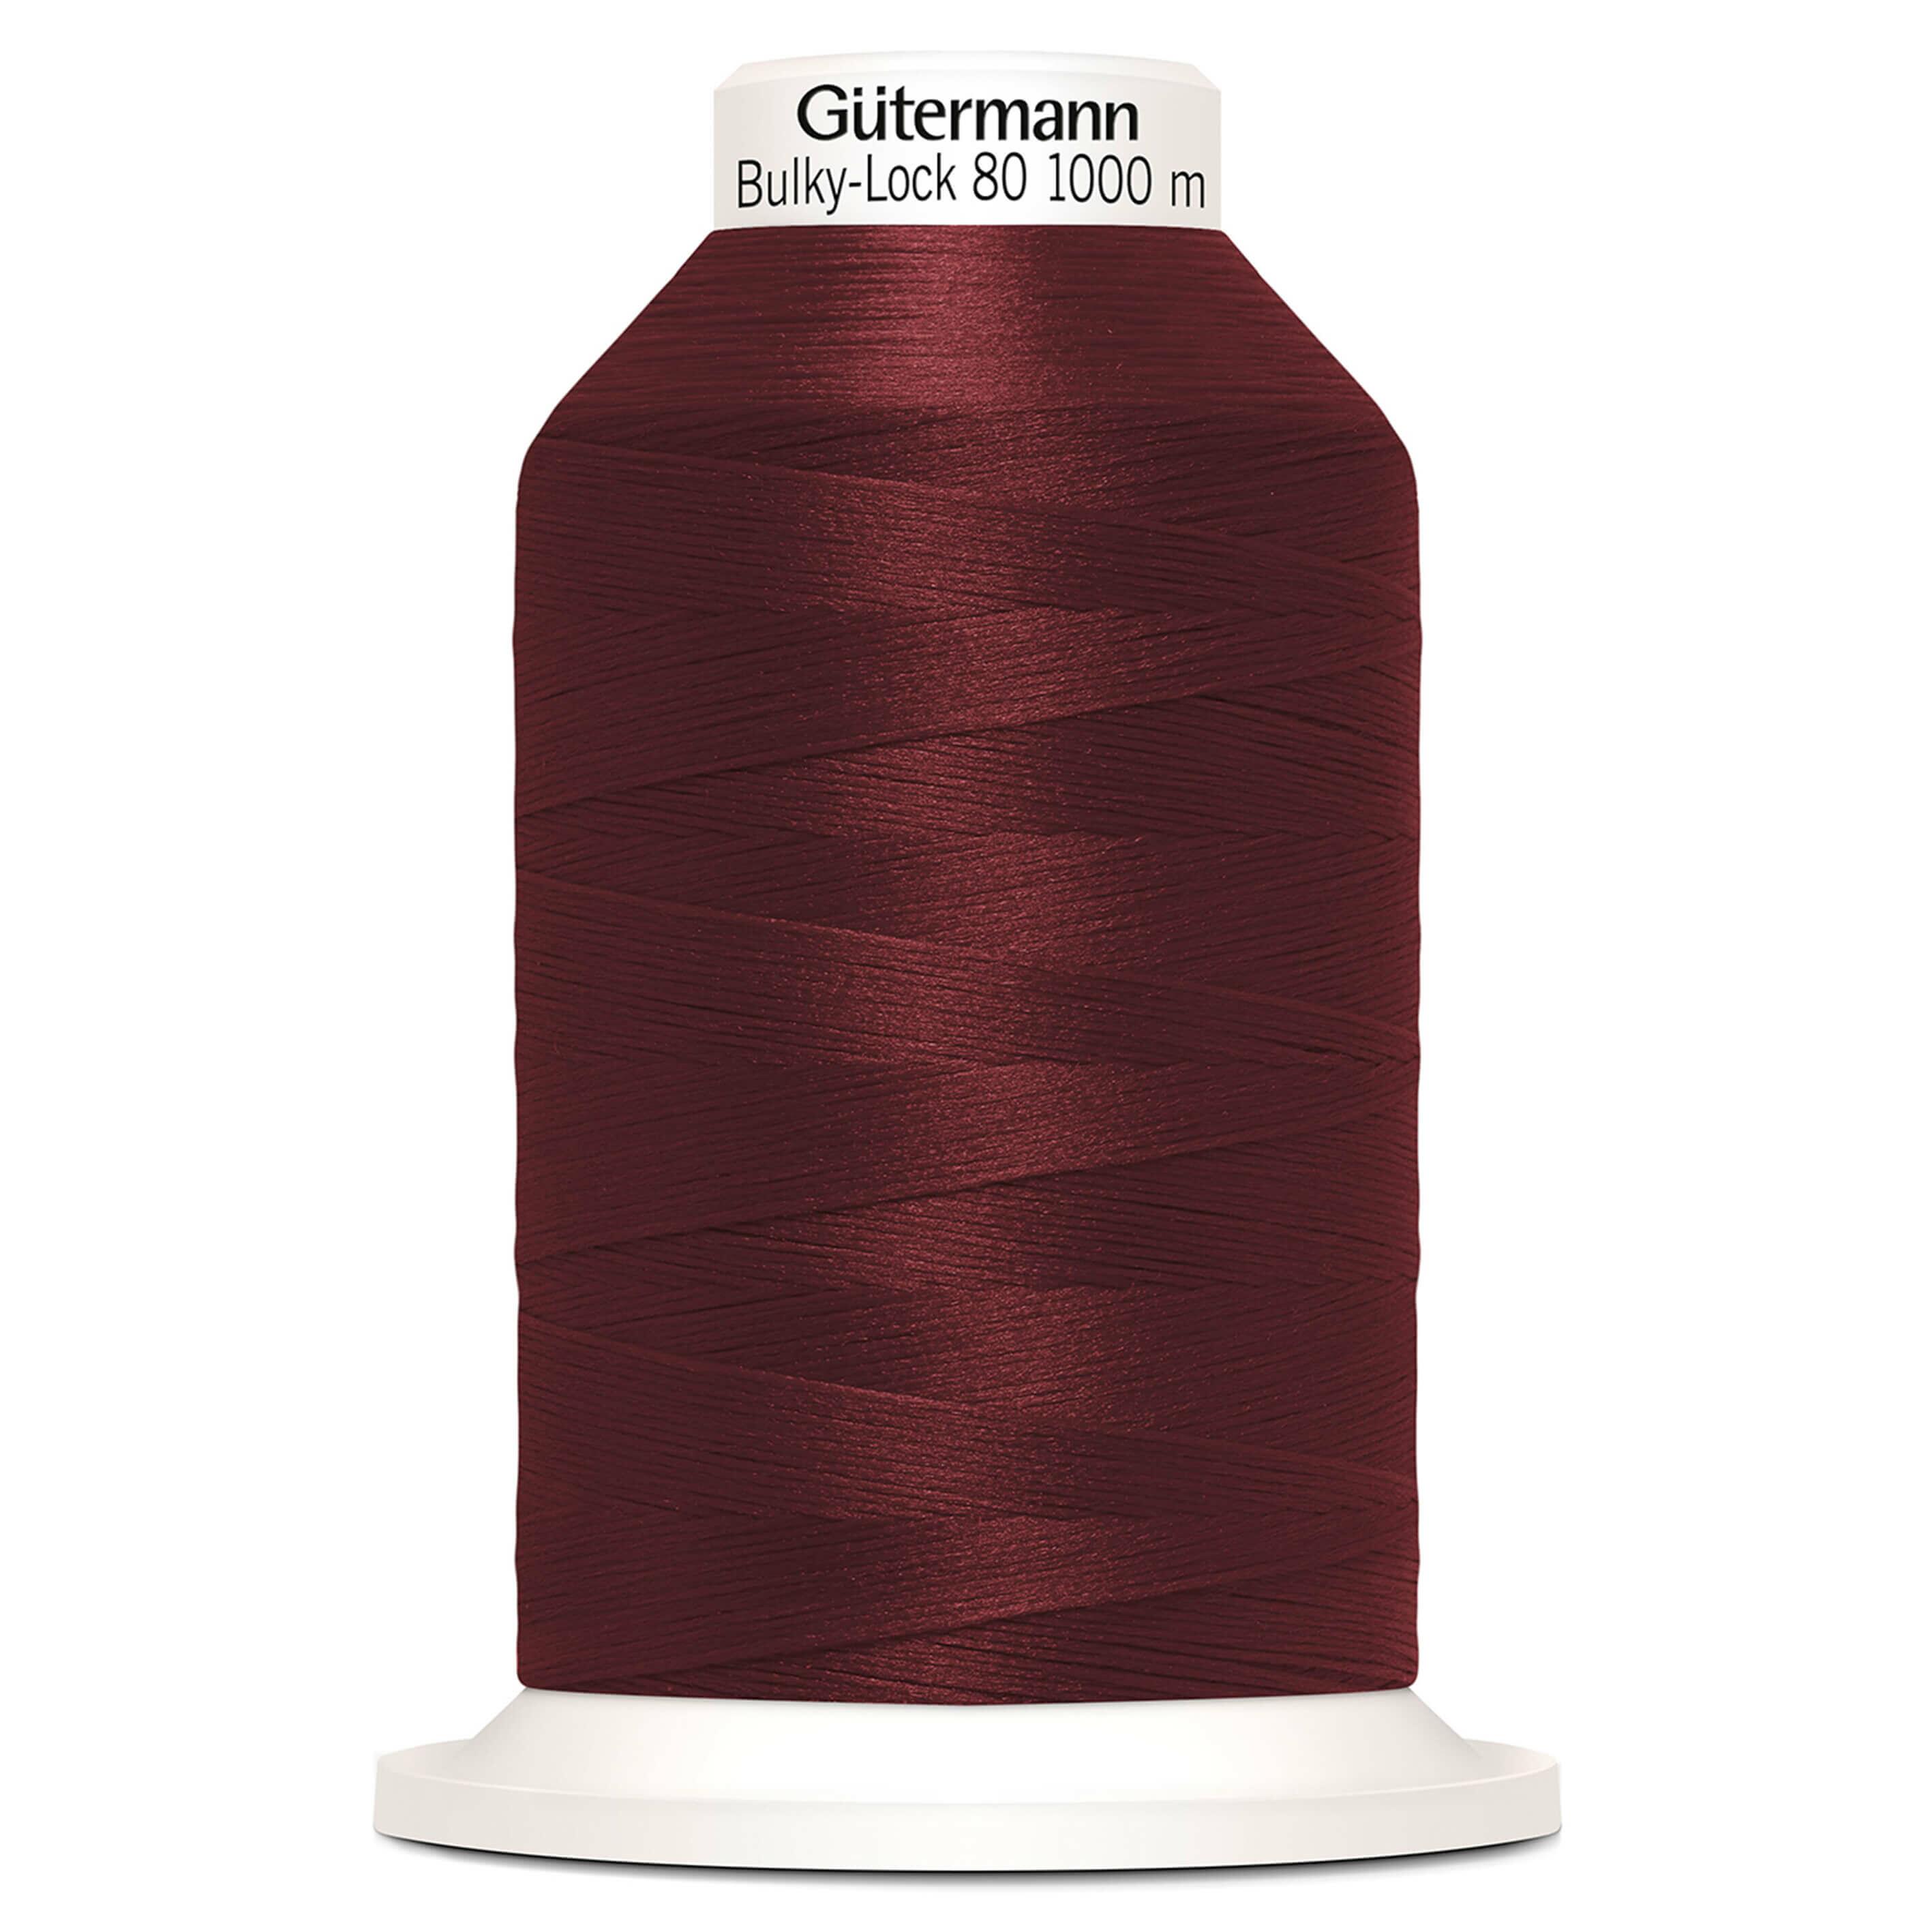 Gutermann Bulky Lock 80 overlocking thread in colour 369 Mulberry